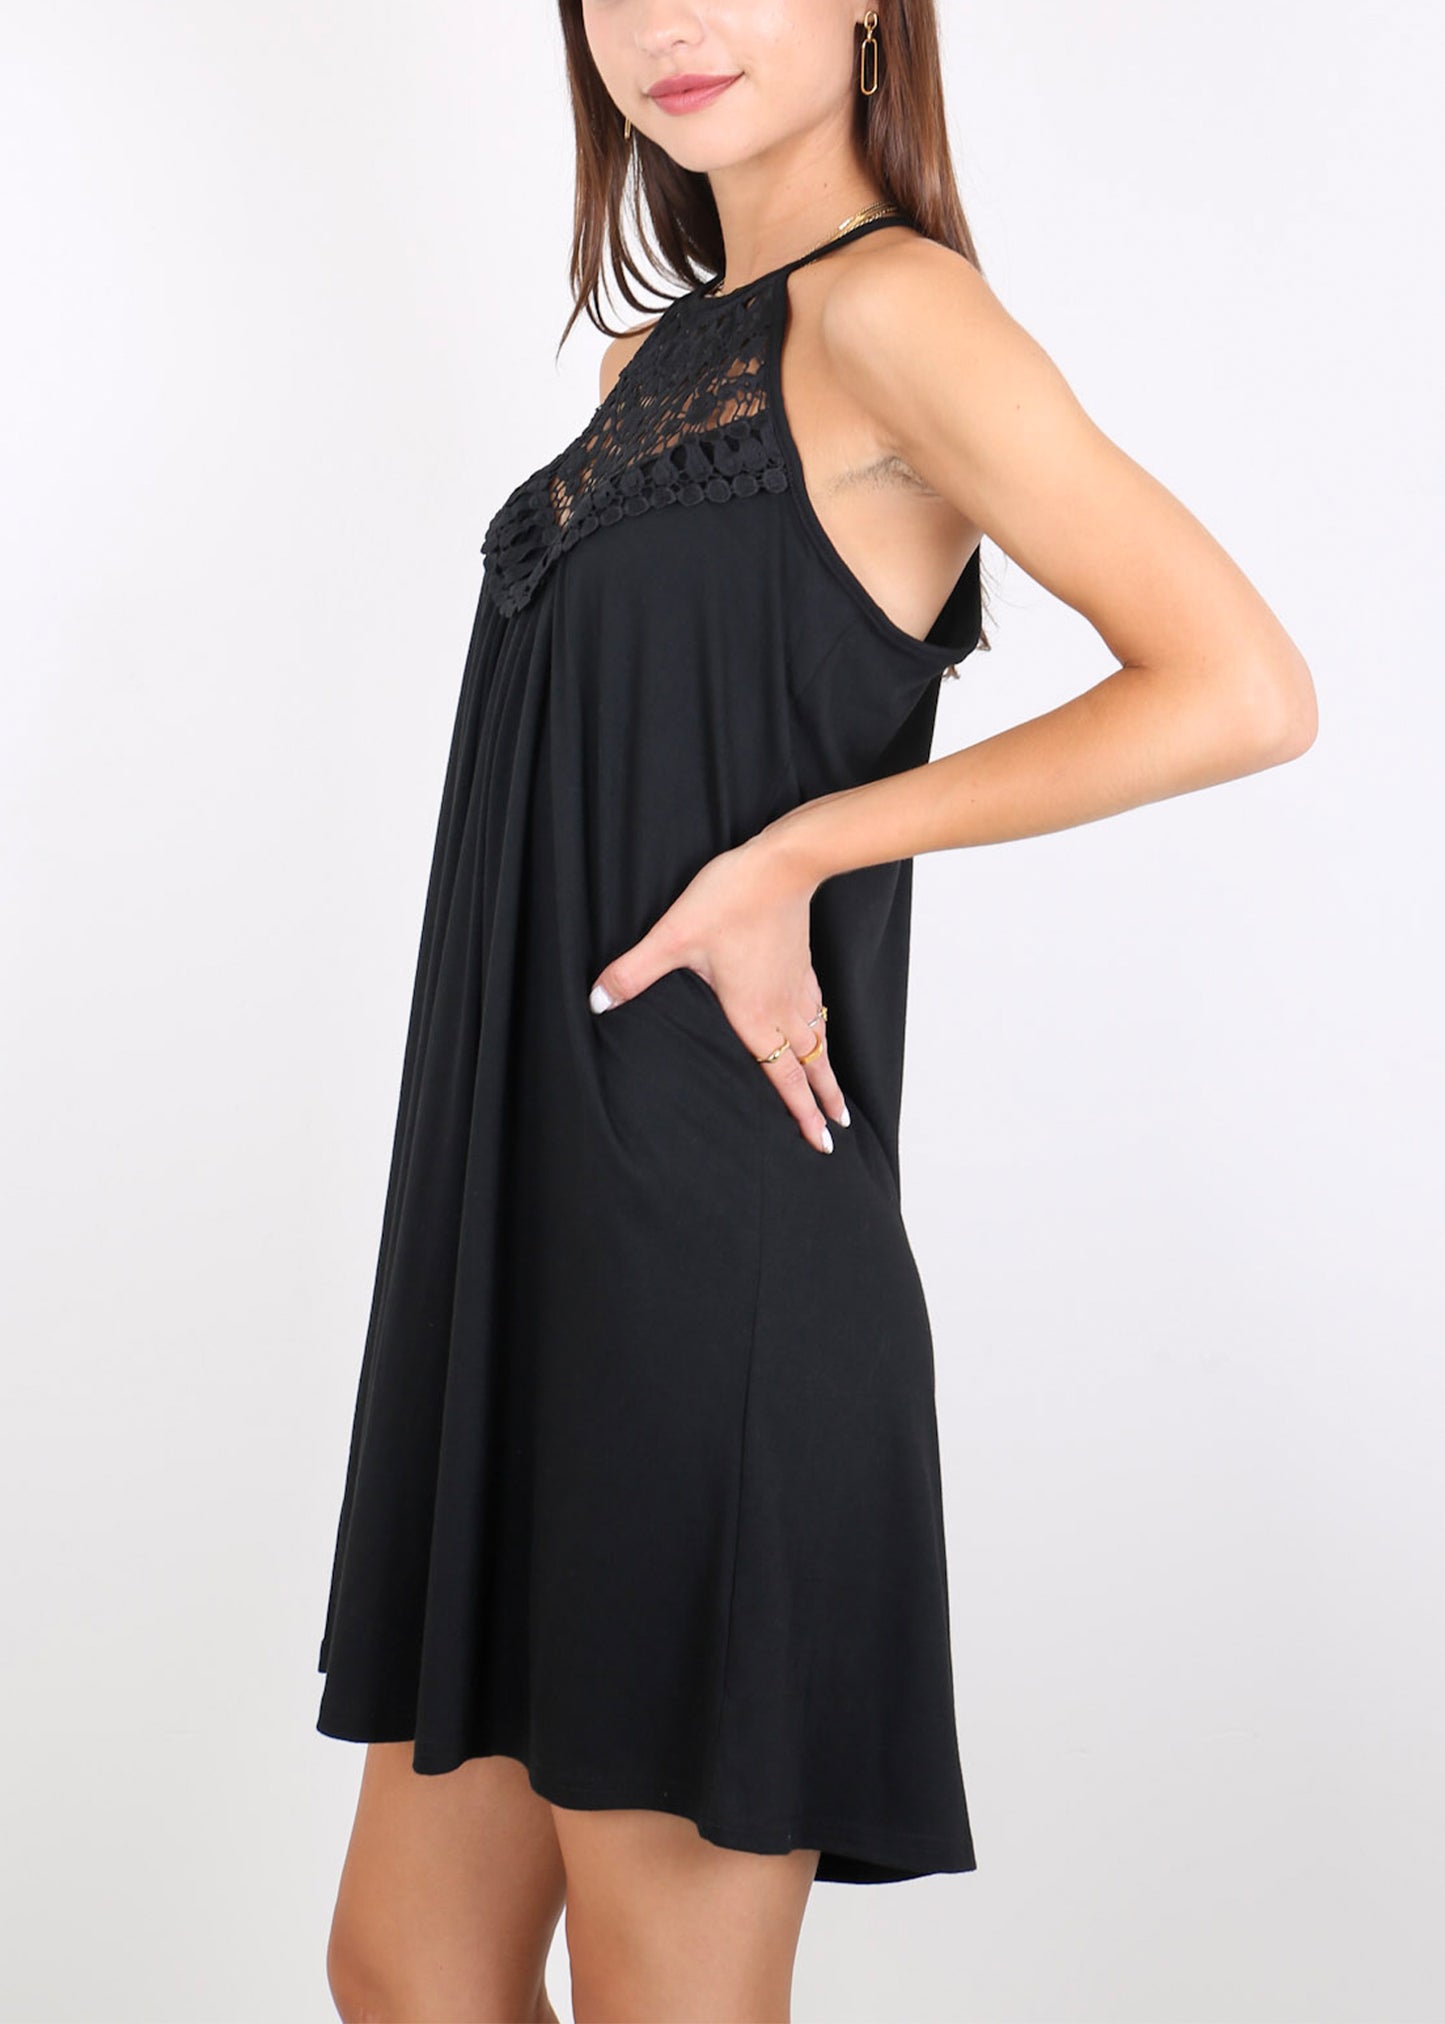 Anna-Kaci Sleeveless Halter Dresses for Women Keyhole Lace Flared Swing Dress Casual Loose Sundress